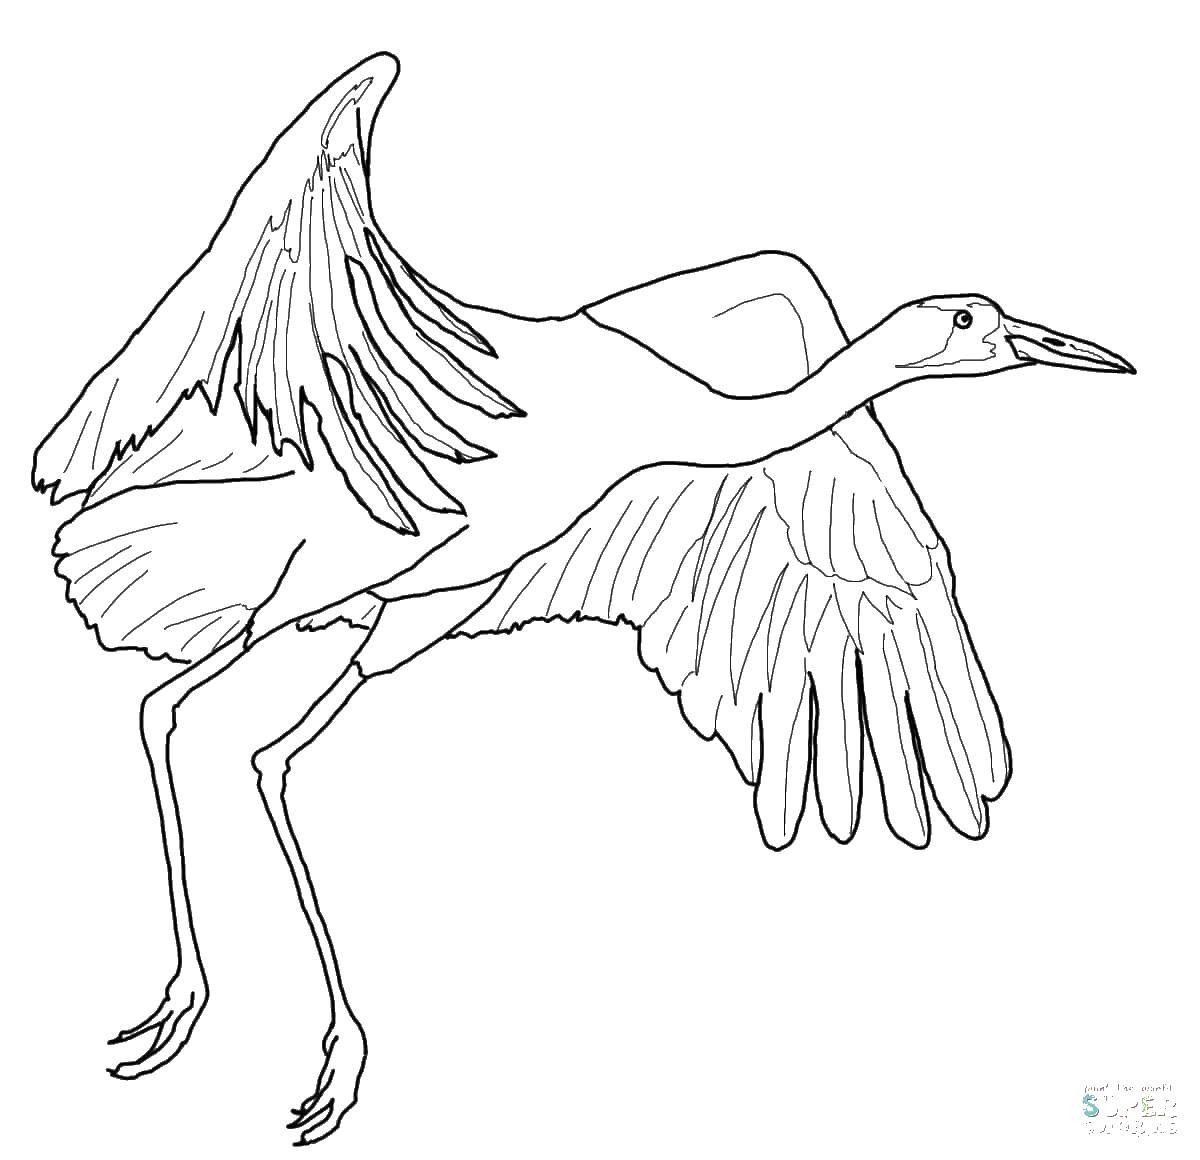 Coloring Flying Heron. Category birds. Tags:  Birds, Heron.